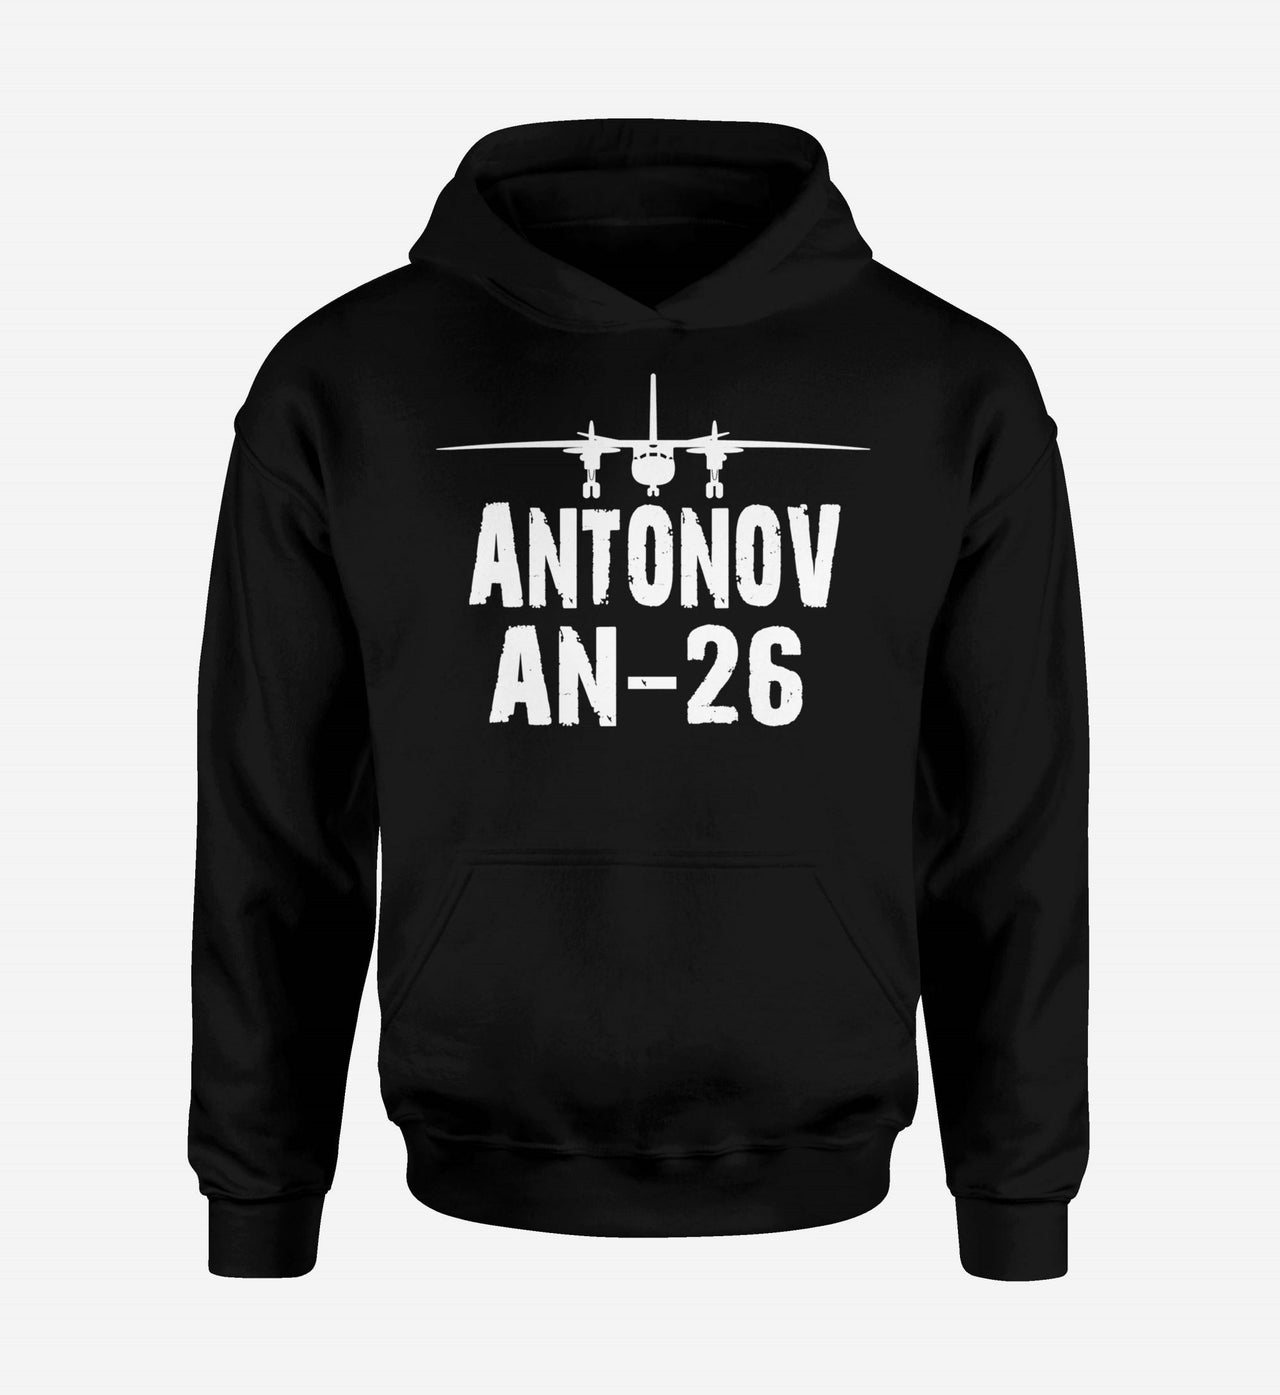 Antonov AN-26 & Plane Designed Hoodies